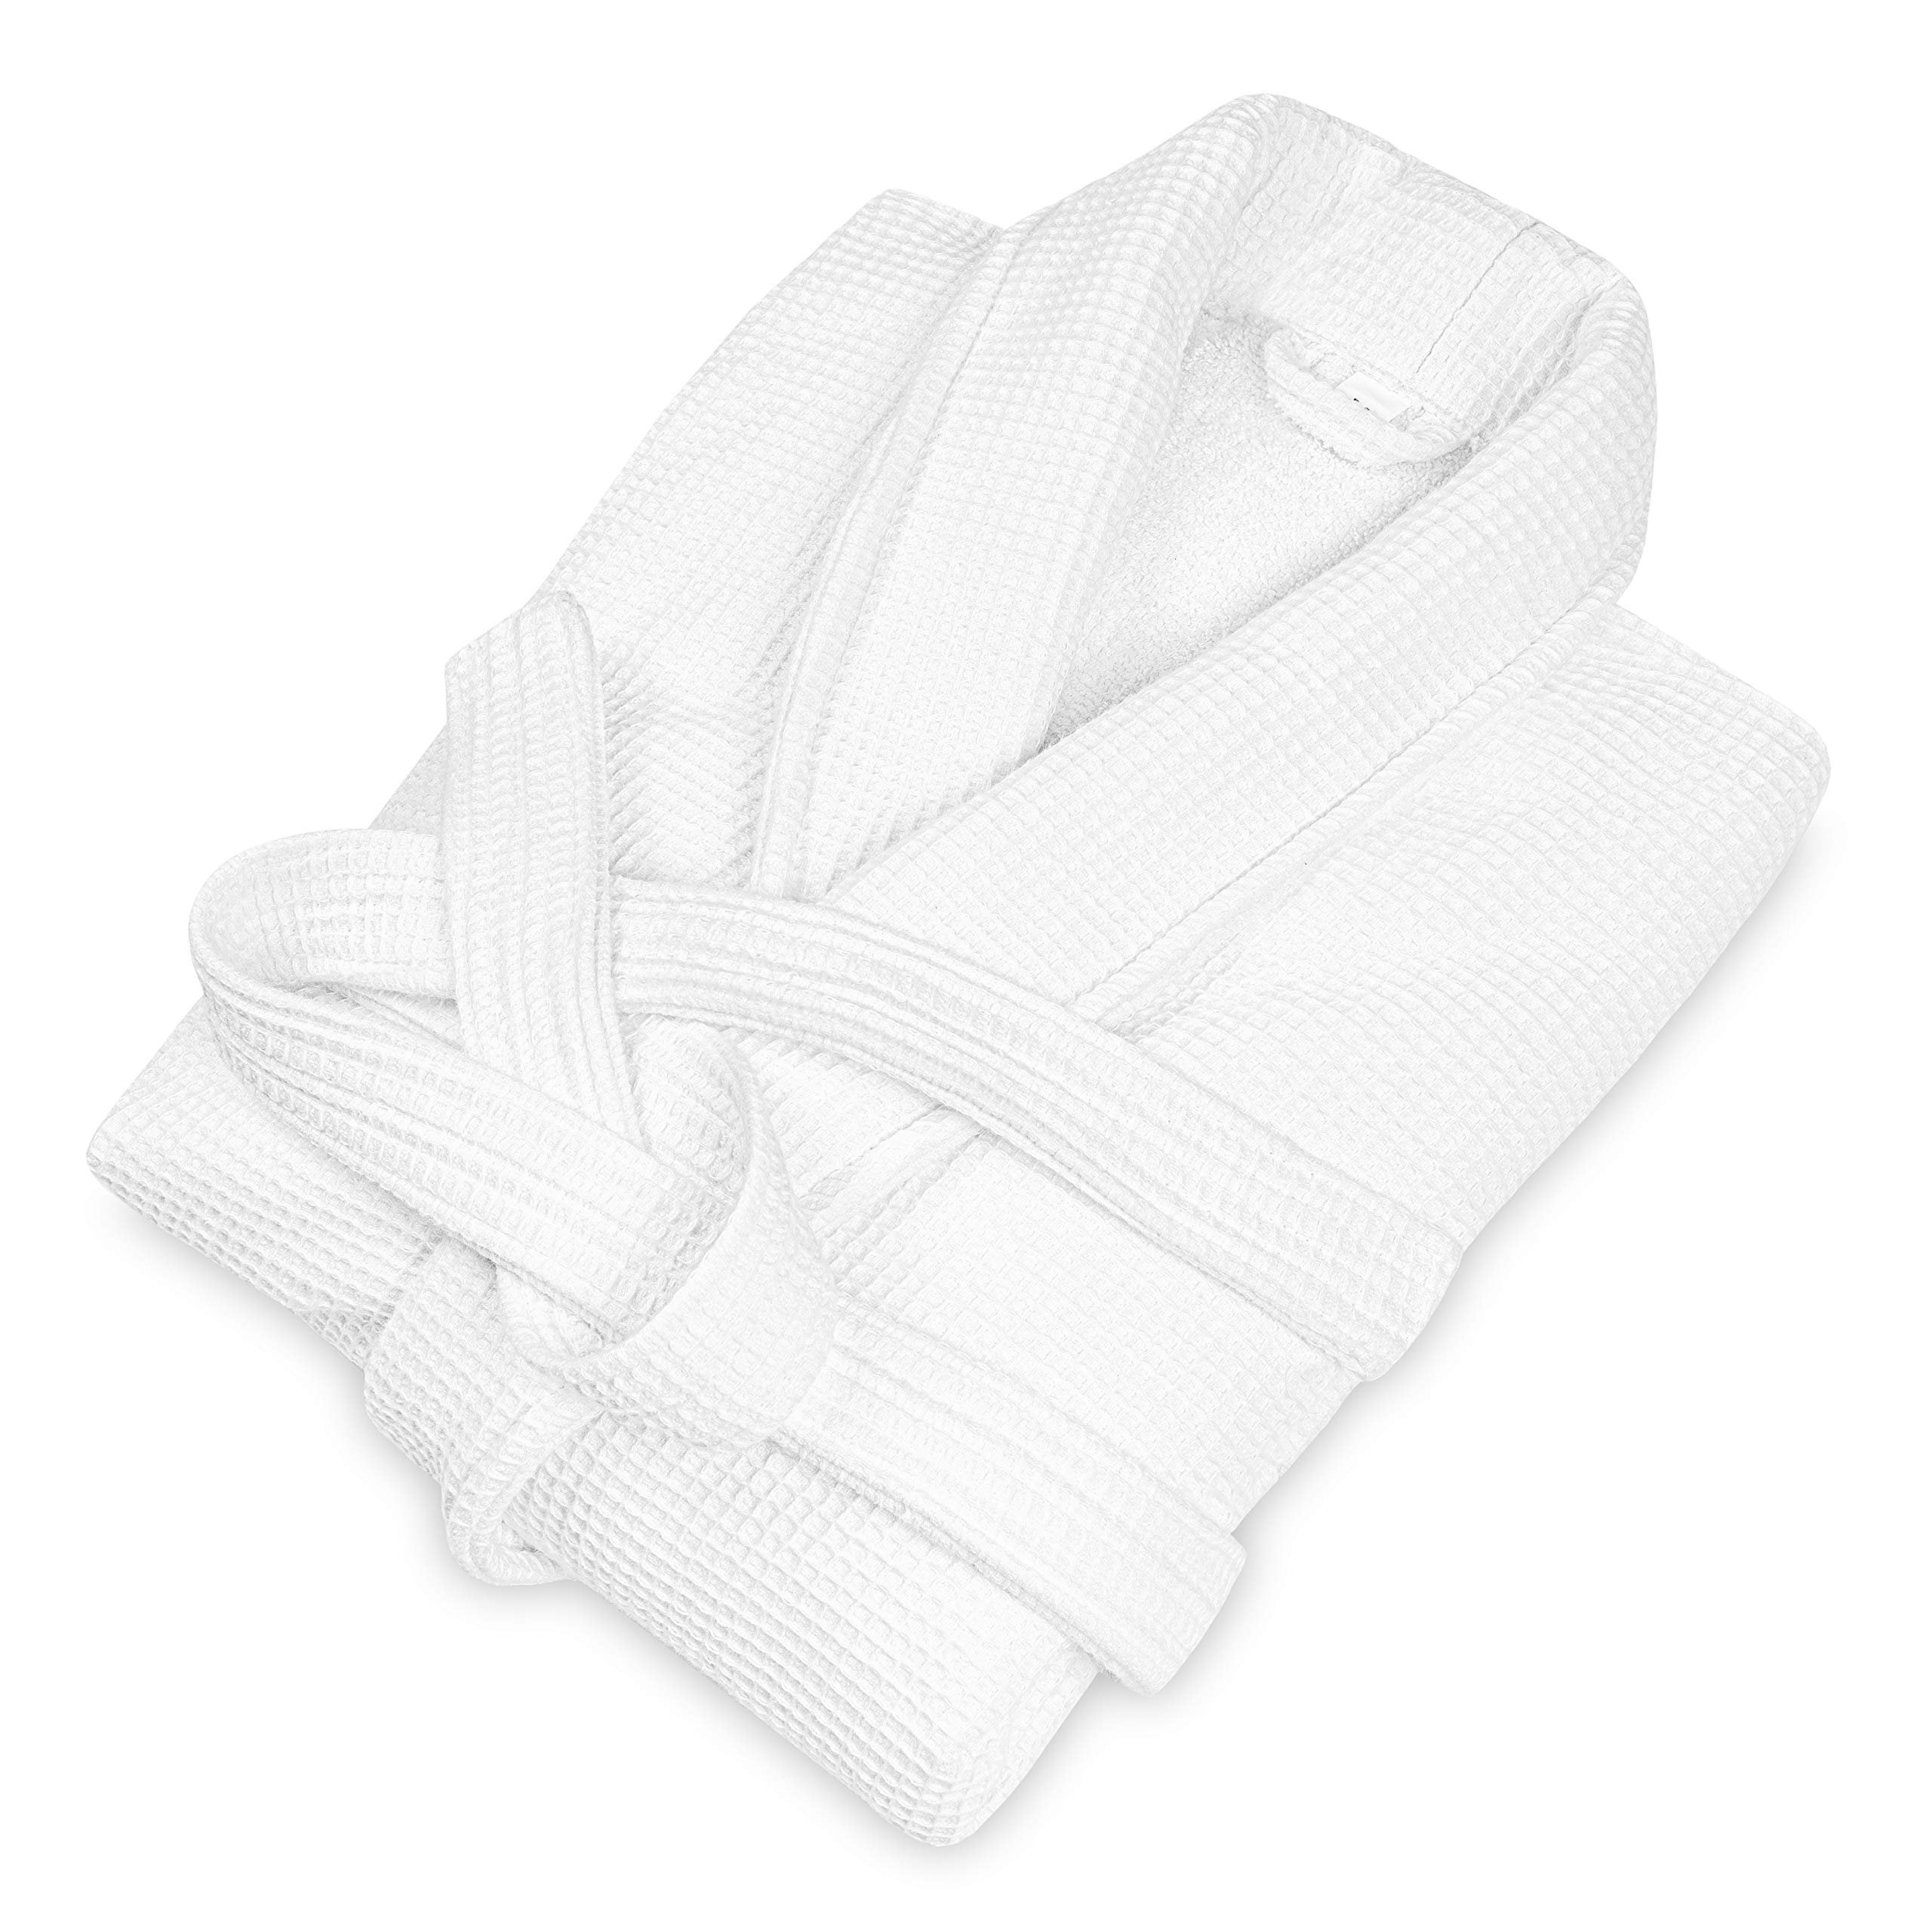 Free Shipping Luxury Spa Bathrobe - White Cotton Waffle/Terry Towel, Size L Unisex